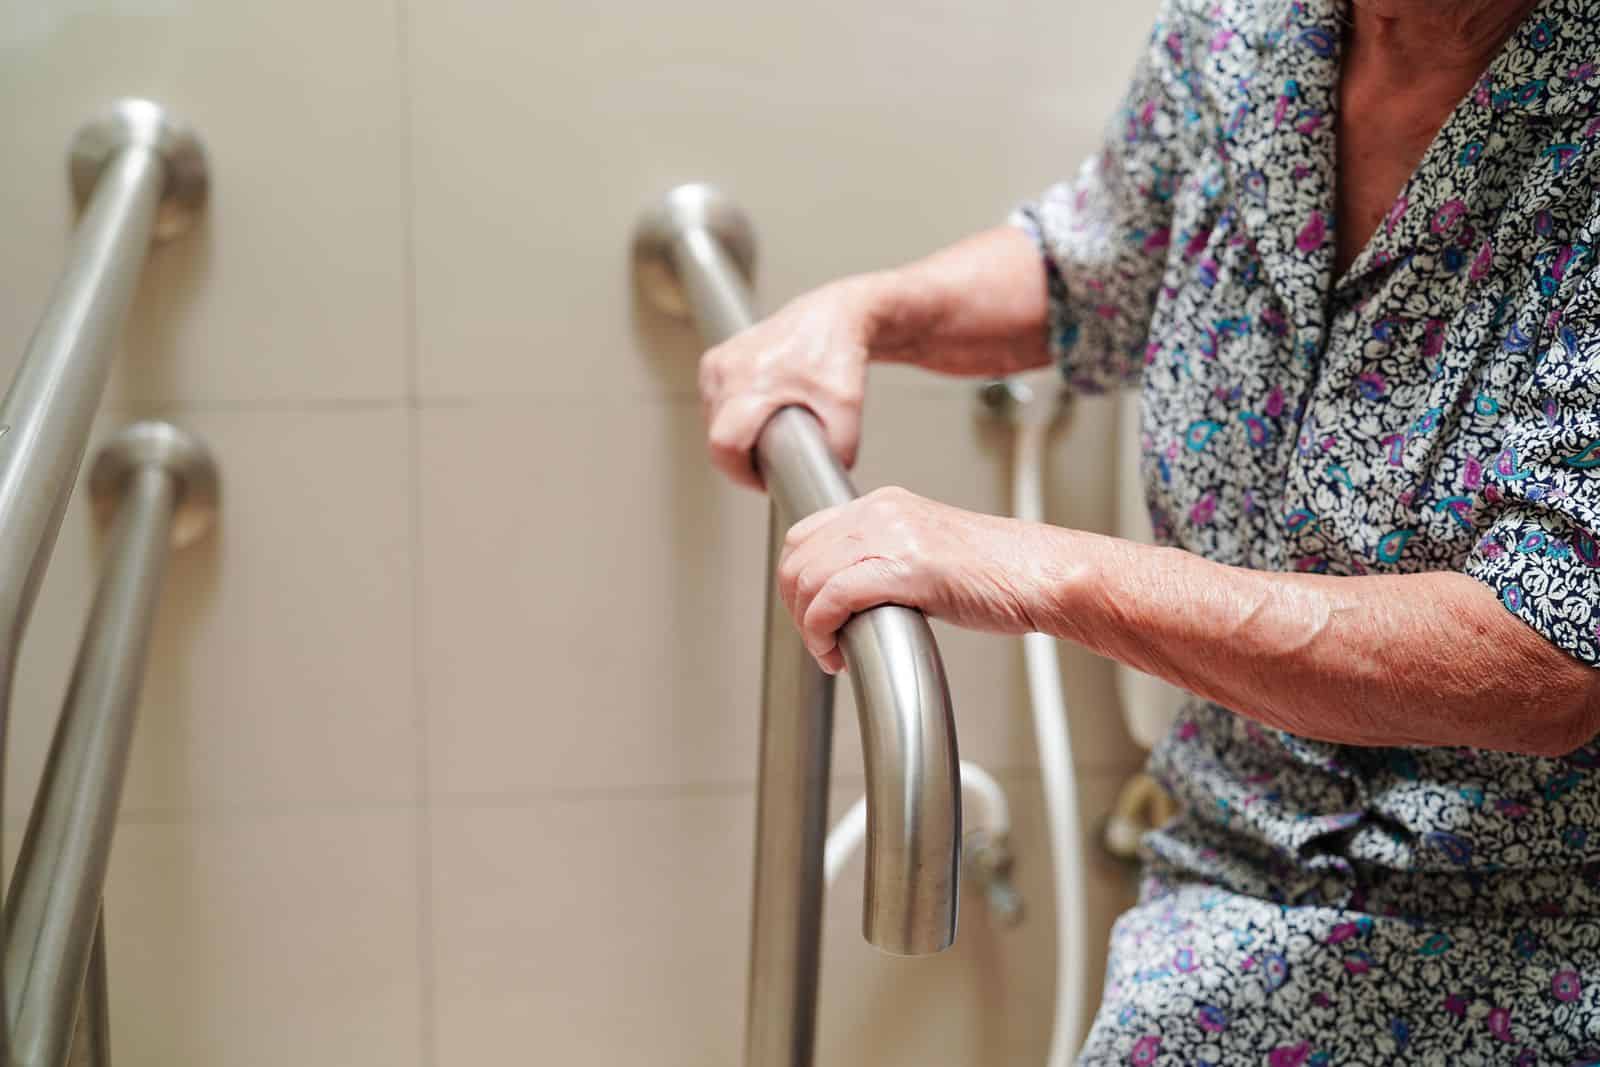 Safety Grab Bars in Bathroom for Elderly.